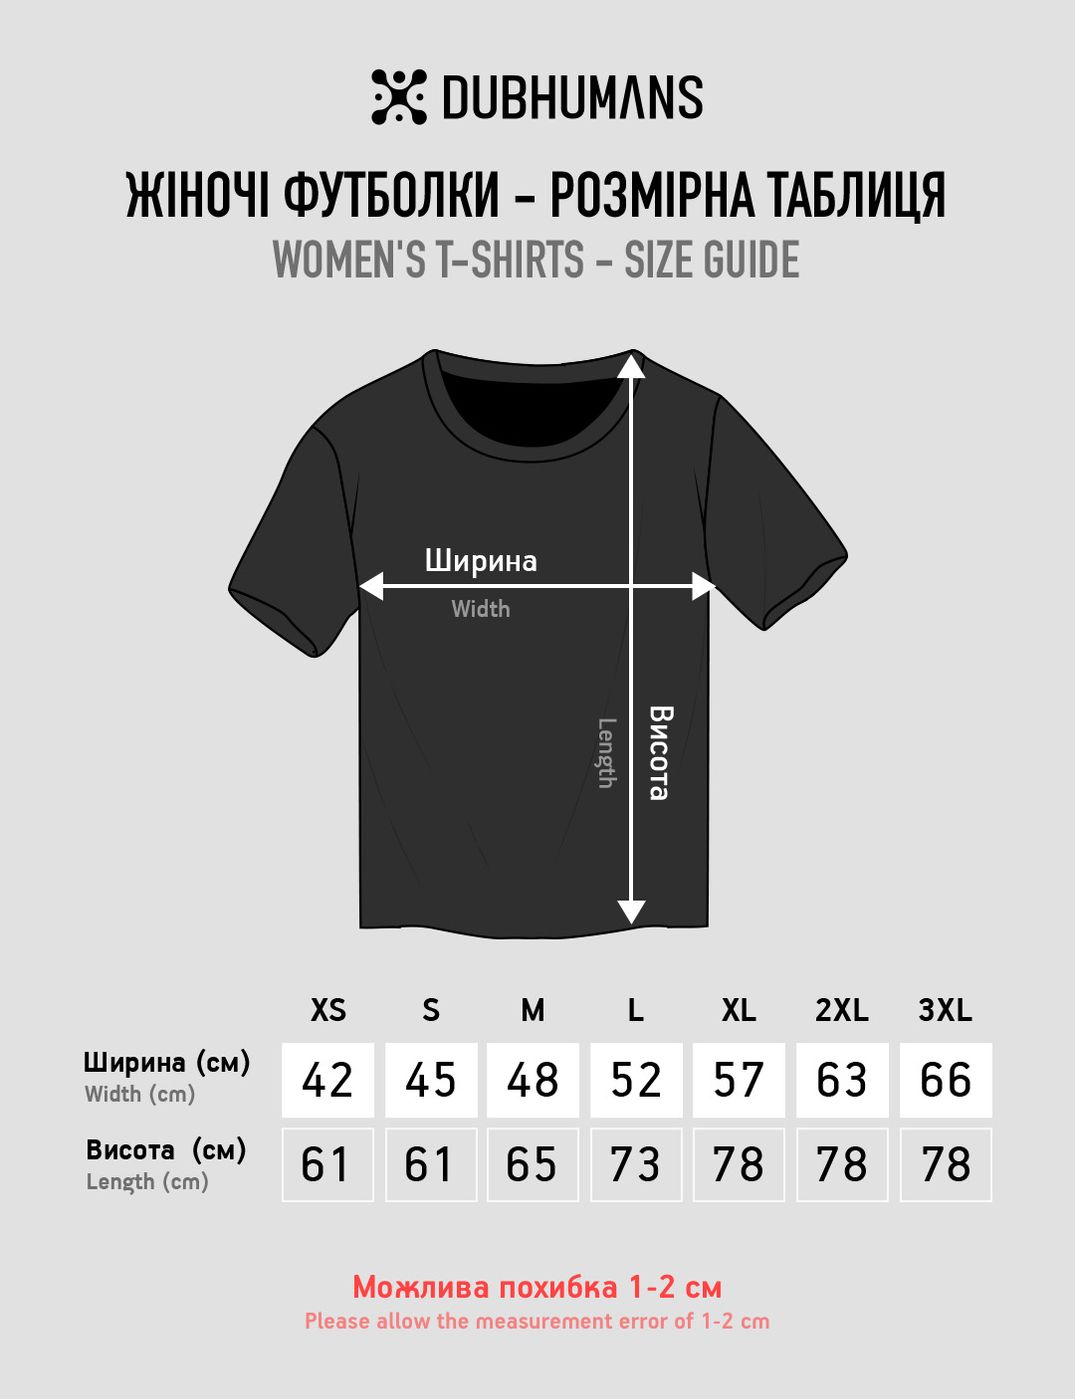 Women`s T-shirt "Carpathian Deer 2.0", Black, M